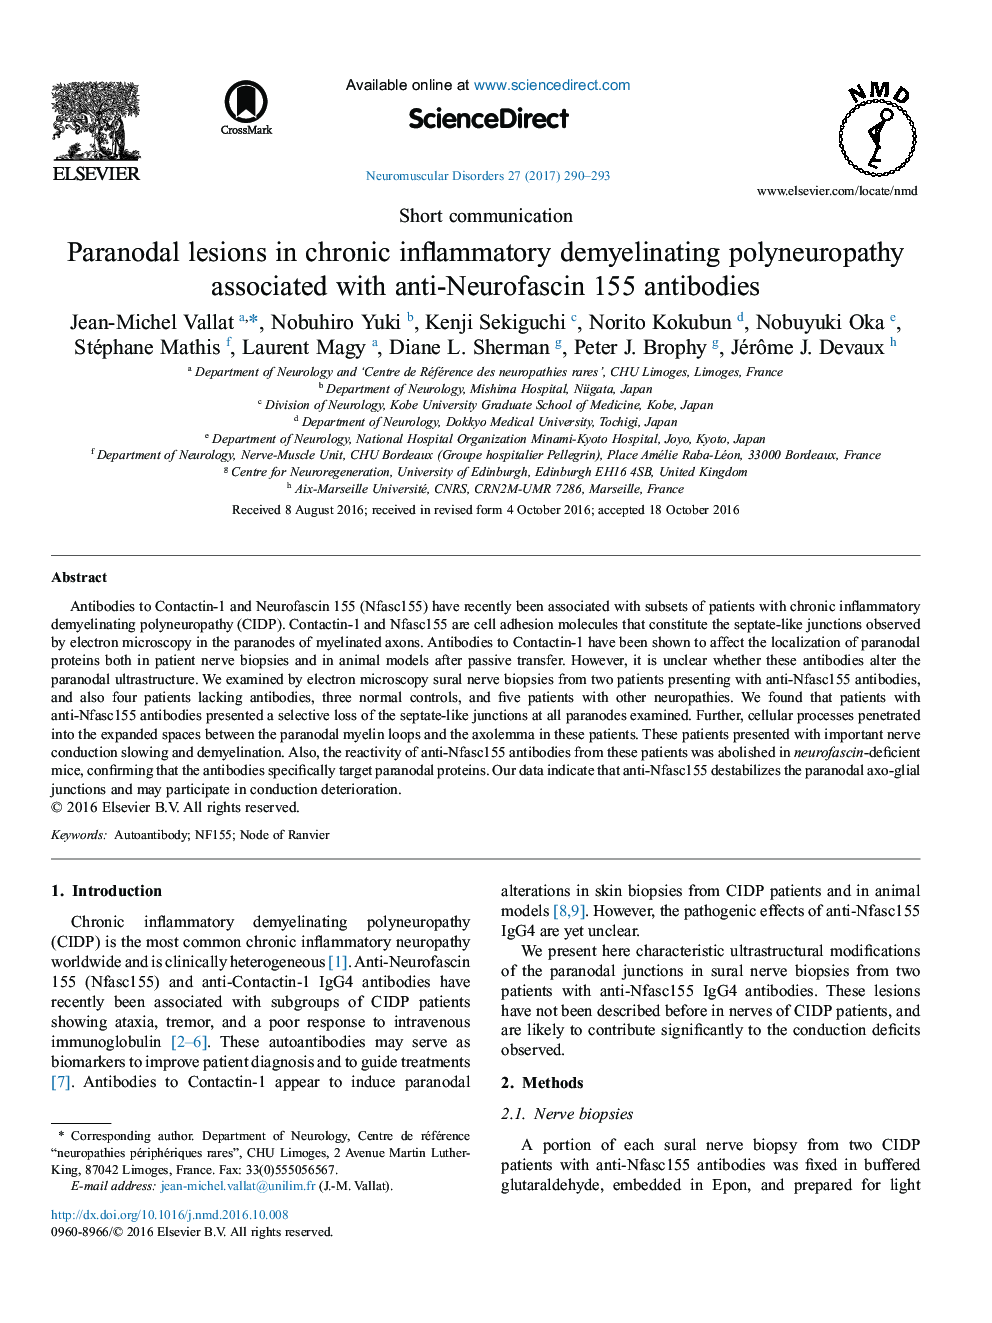 Short communicationParanodal lesions in chronic inflammatory demyelinating polyneuropathy associated with anti-Neurofascin 155 antibodies